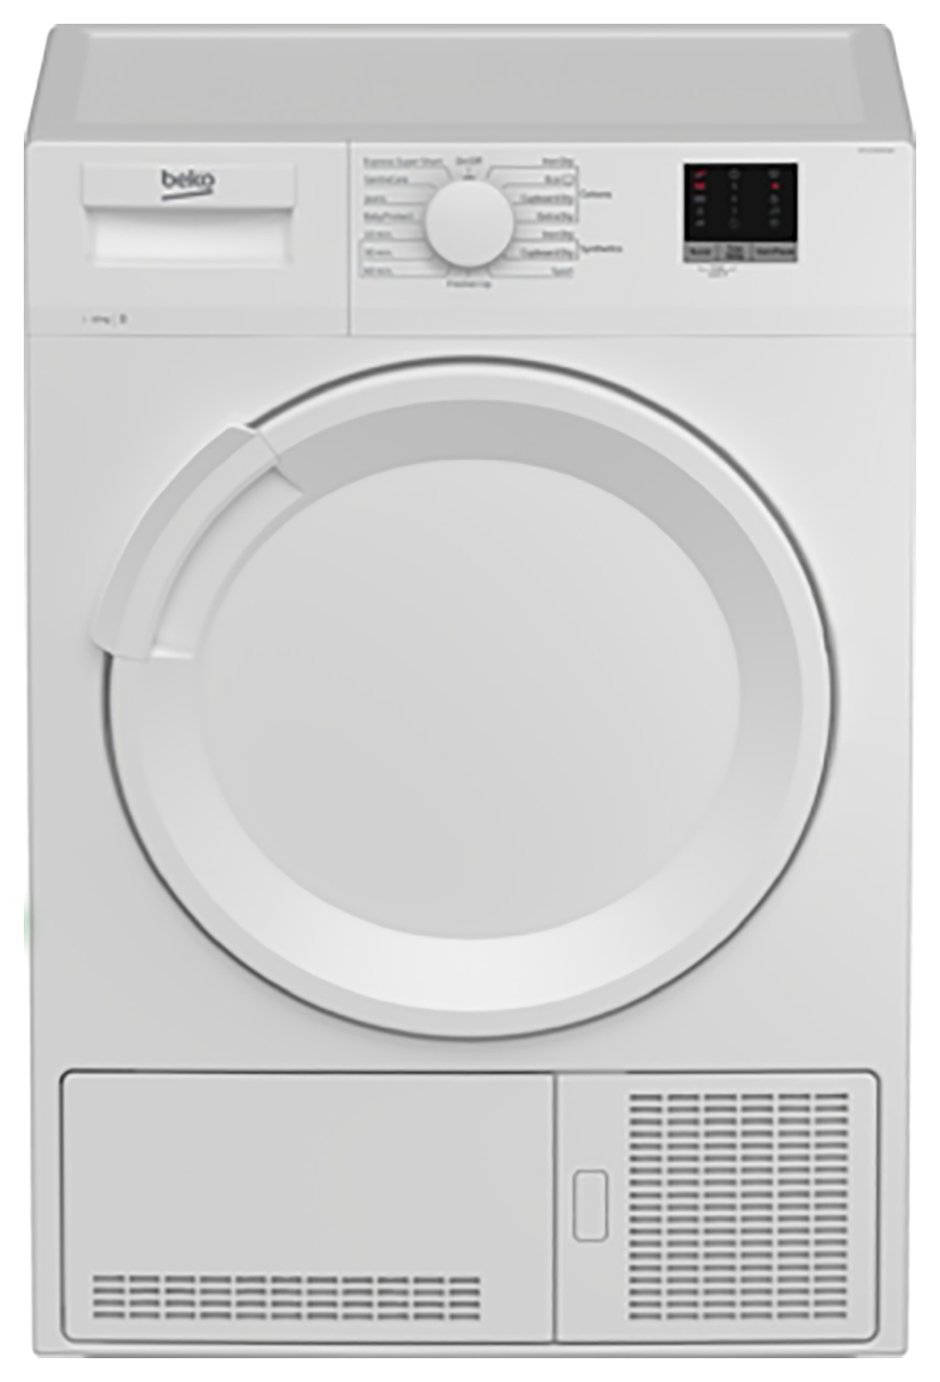 Beko DTLC100051W 10KG Condenser Tumble Dryer - White